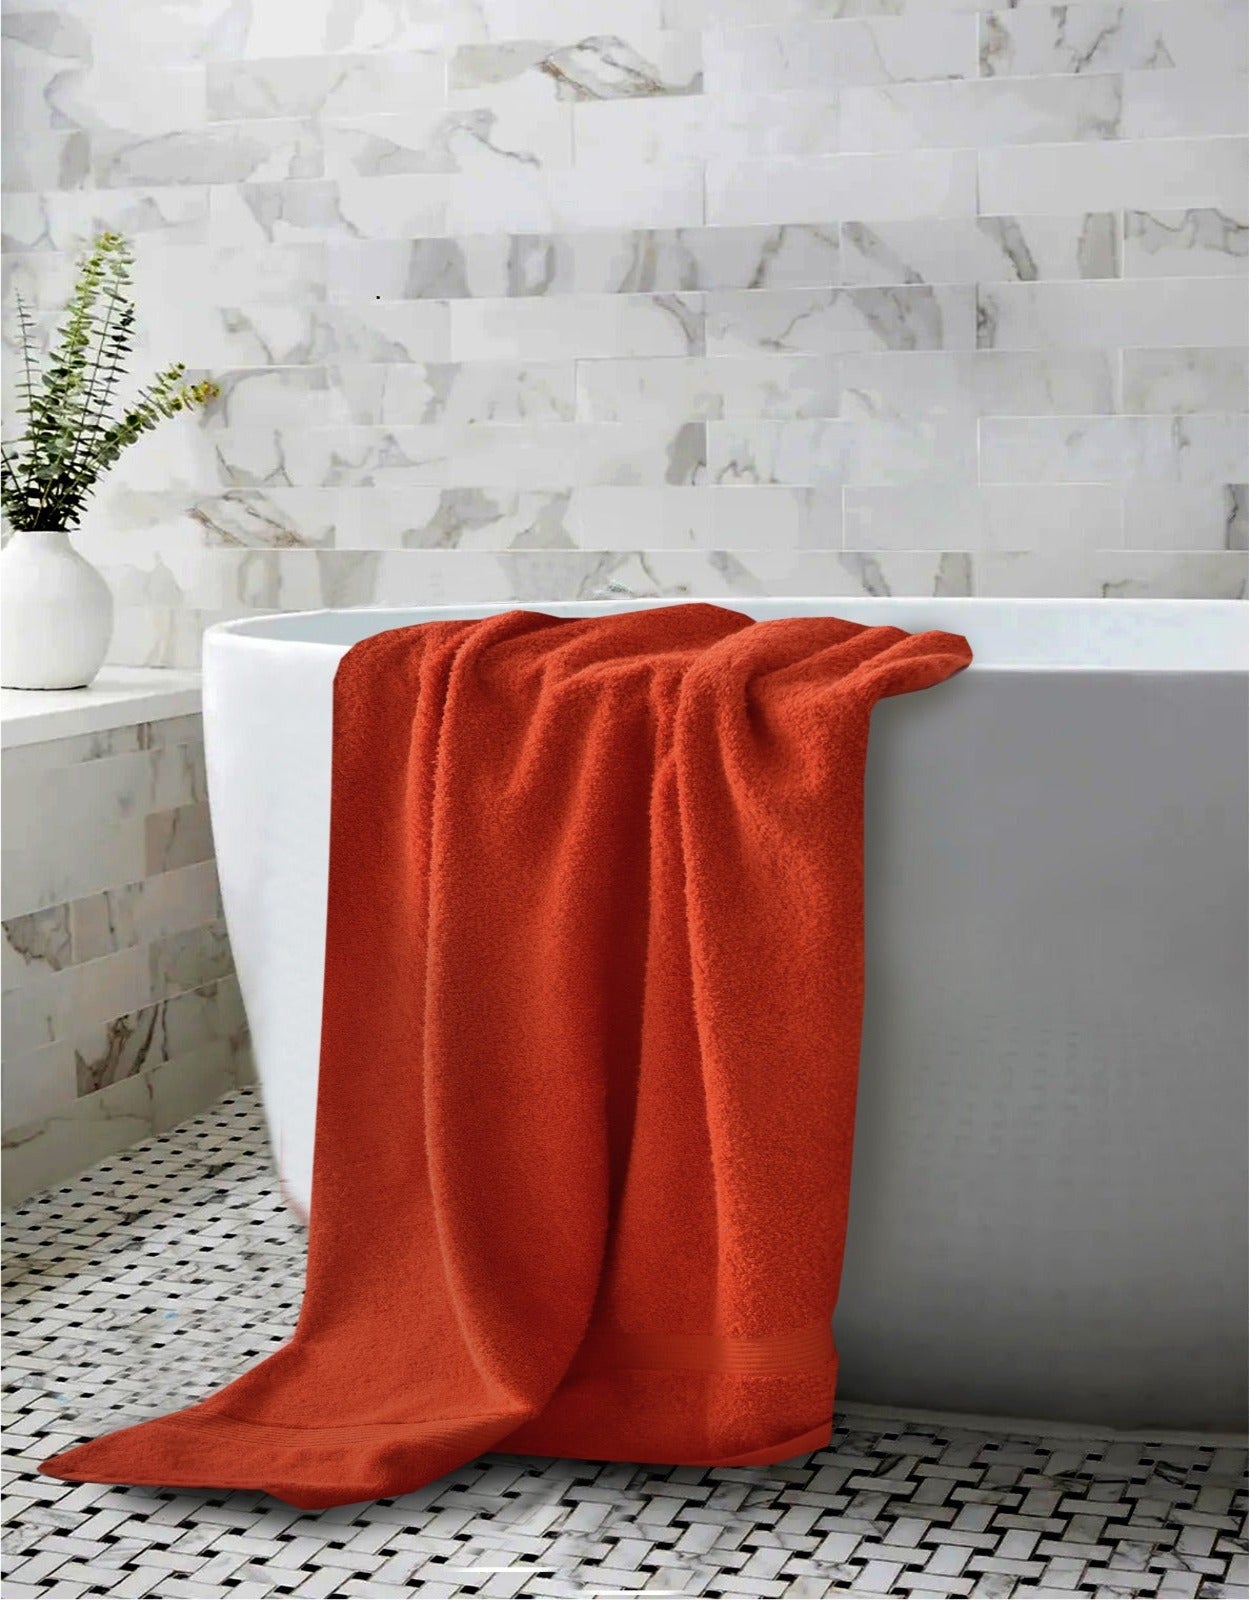 Full size Bath Sheet-Orange Apricot